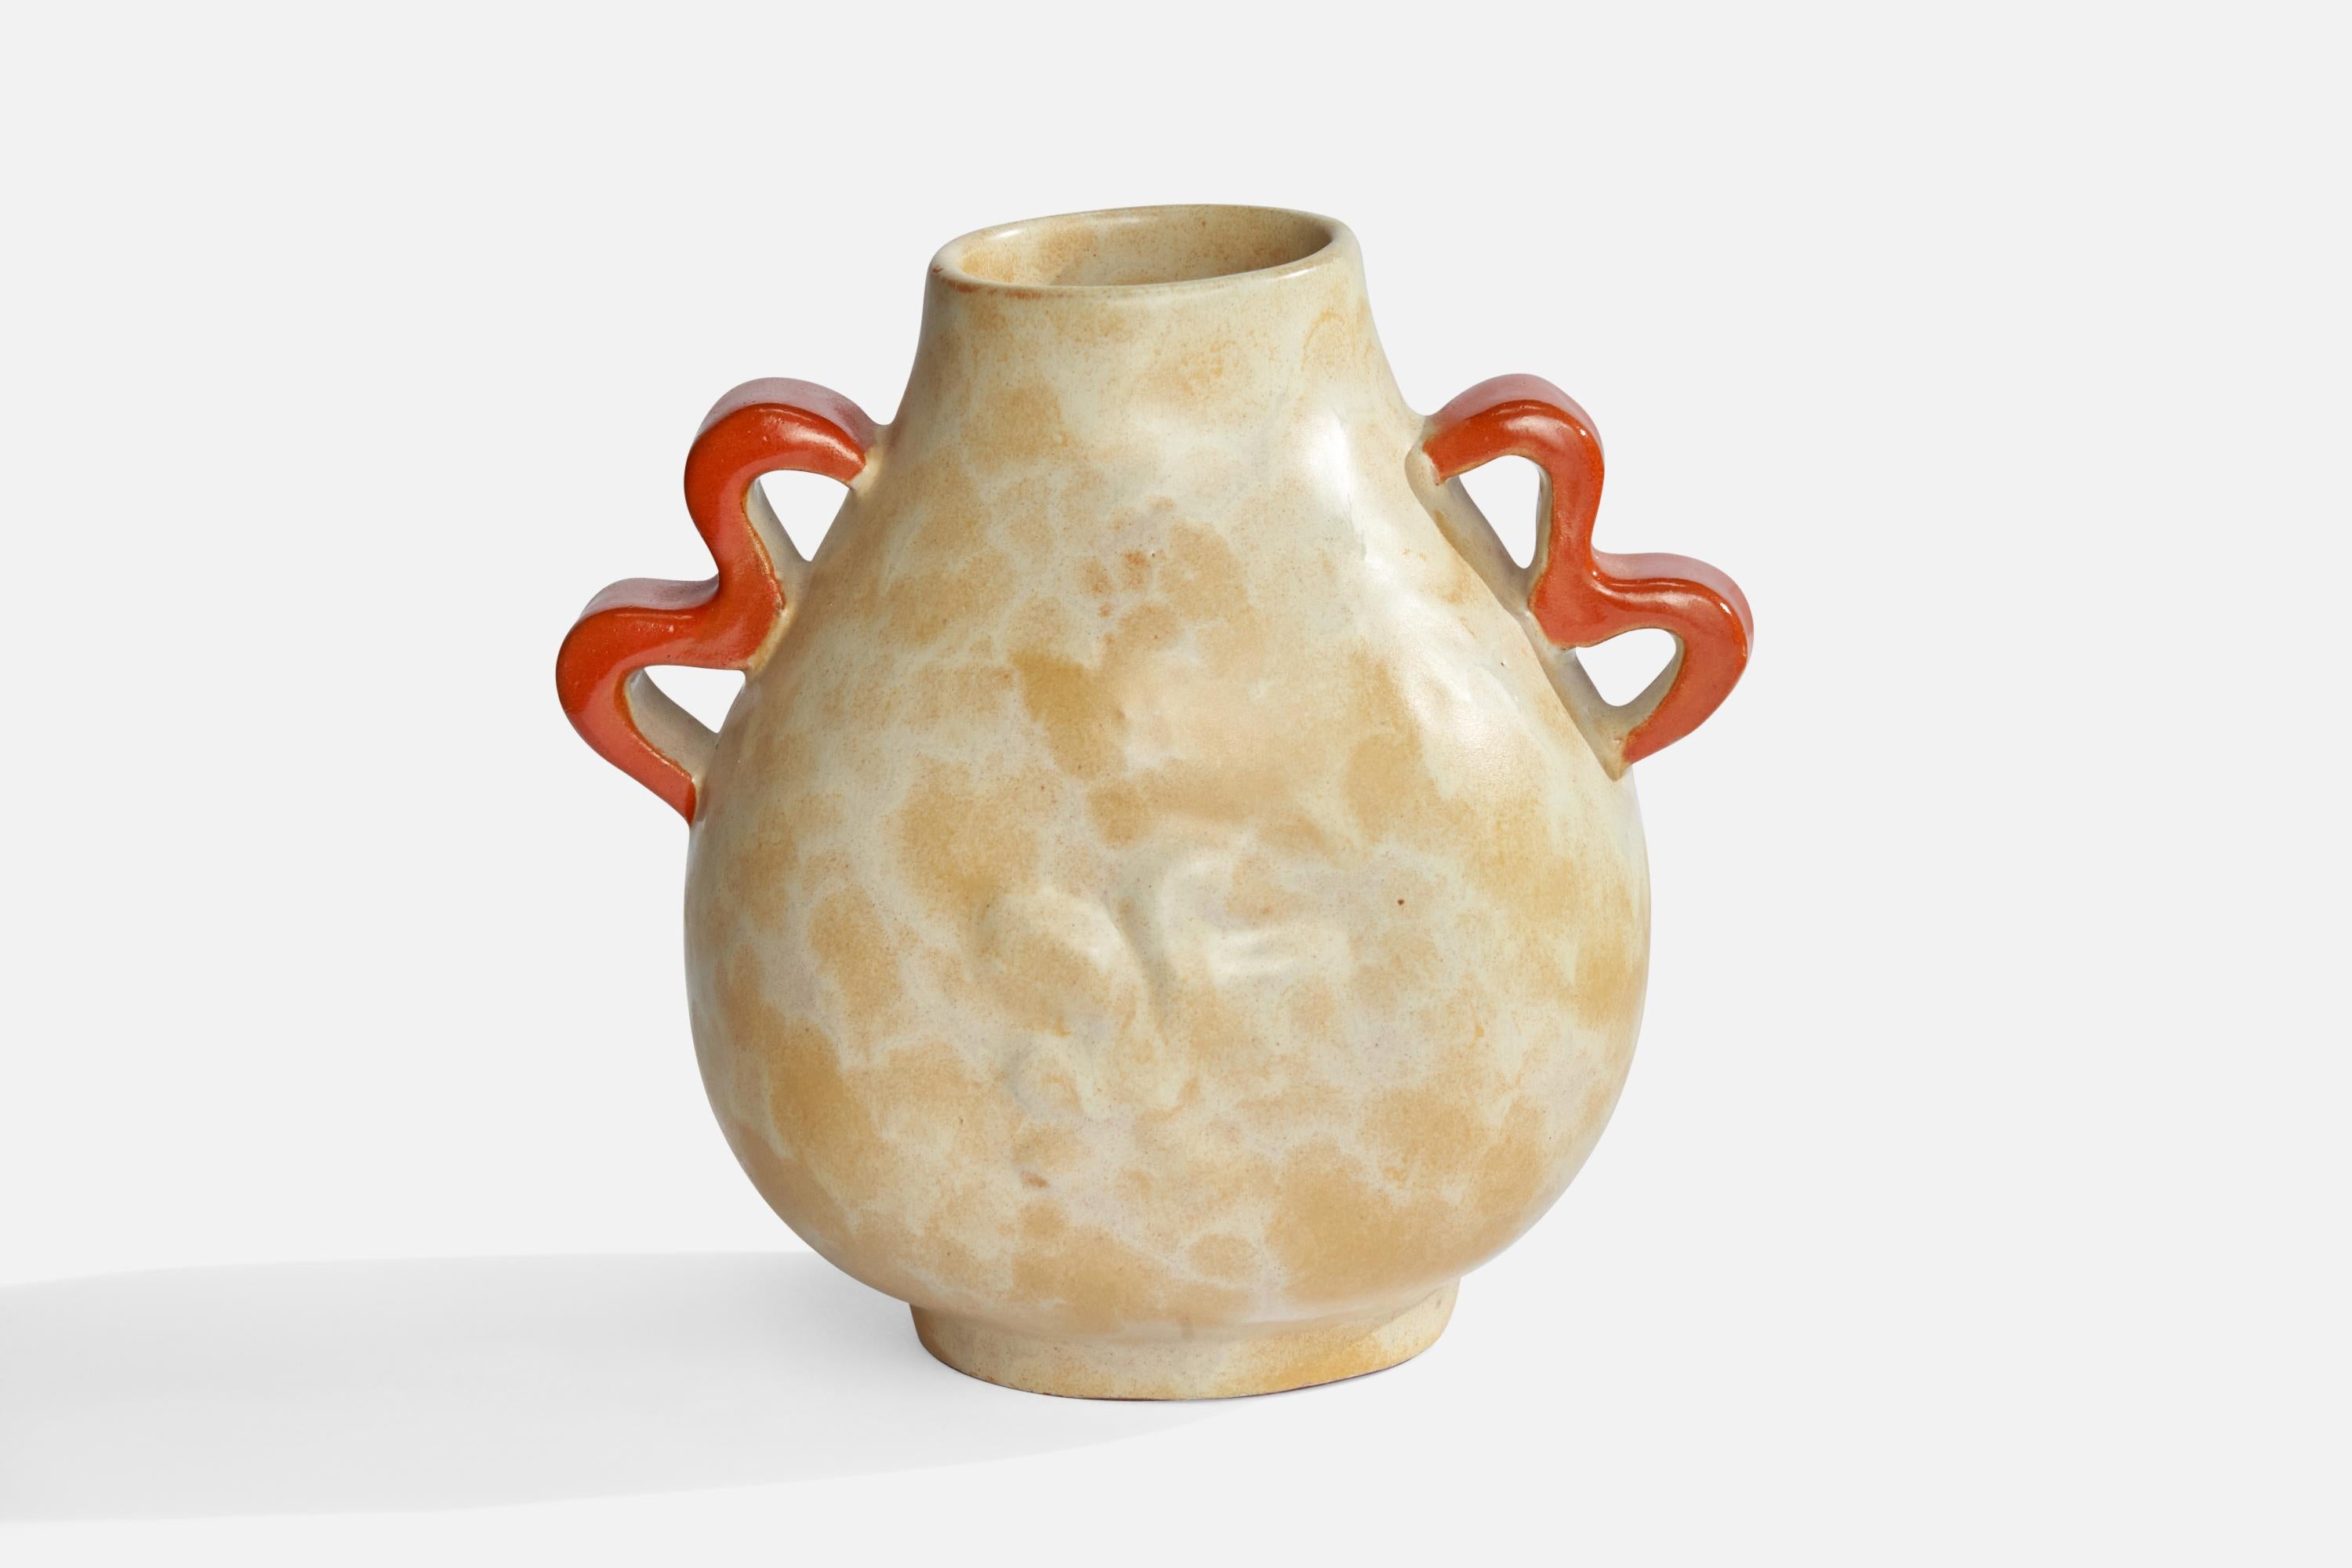 A beige and orange-glazed earthenware vase designed and produced by Upsala Ekeby, Sweden, 1930s.